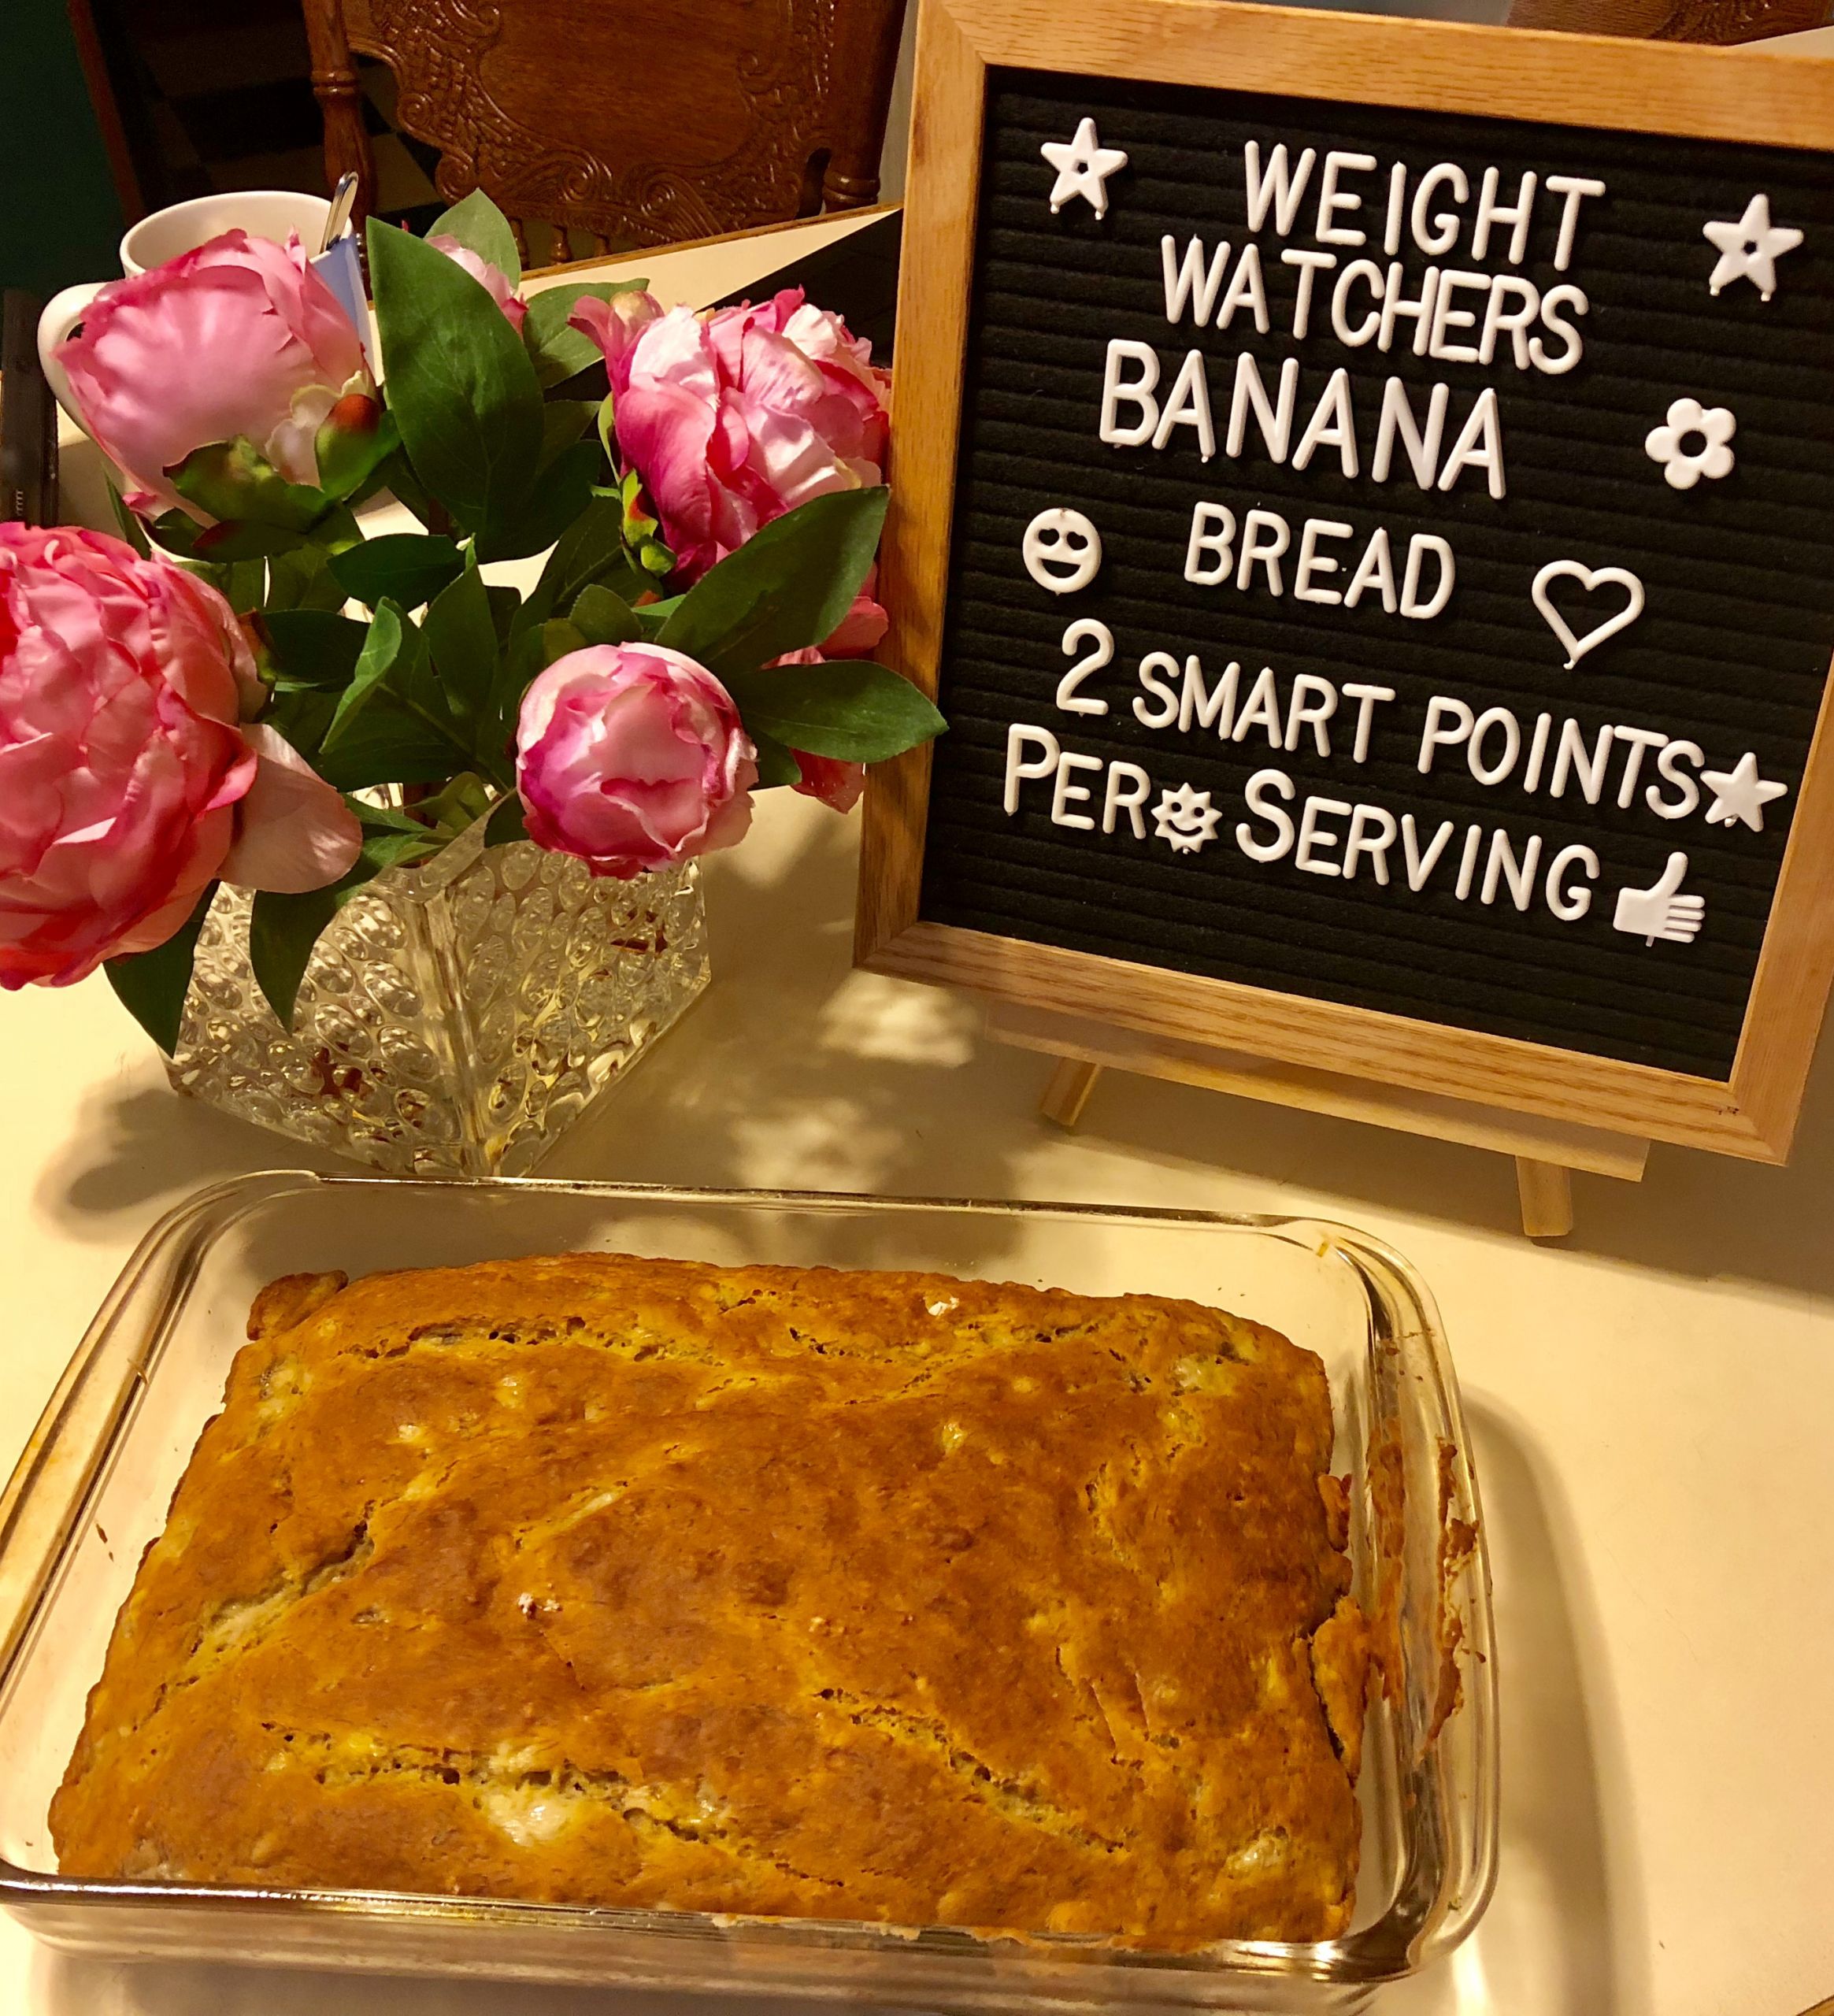 Weight Watchers Banana Recipes
 Weight watchers banana bread recipe